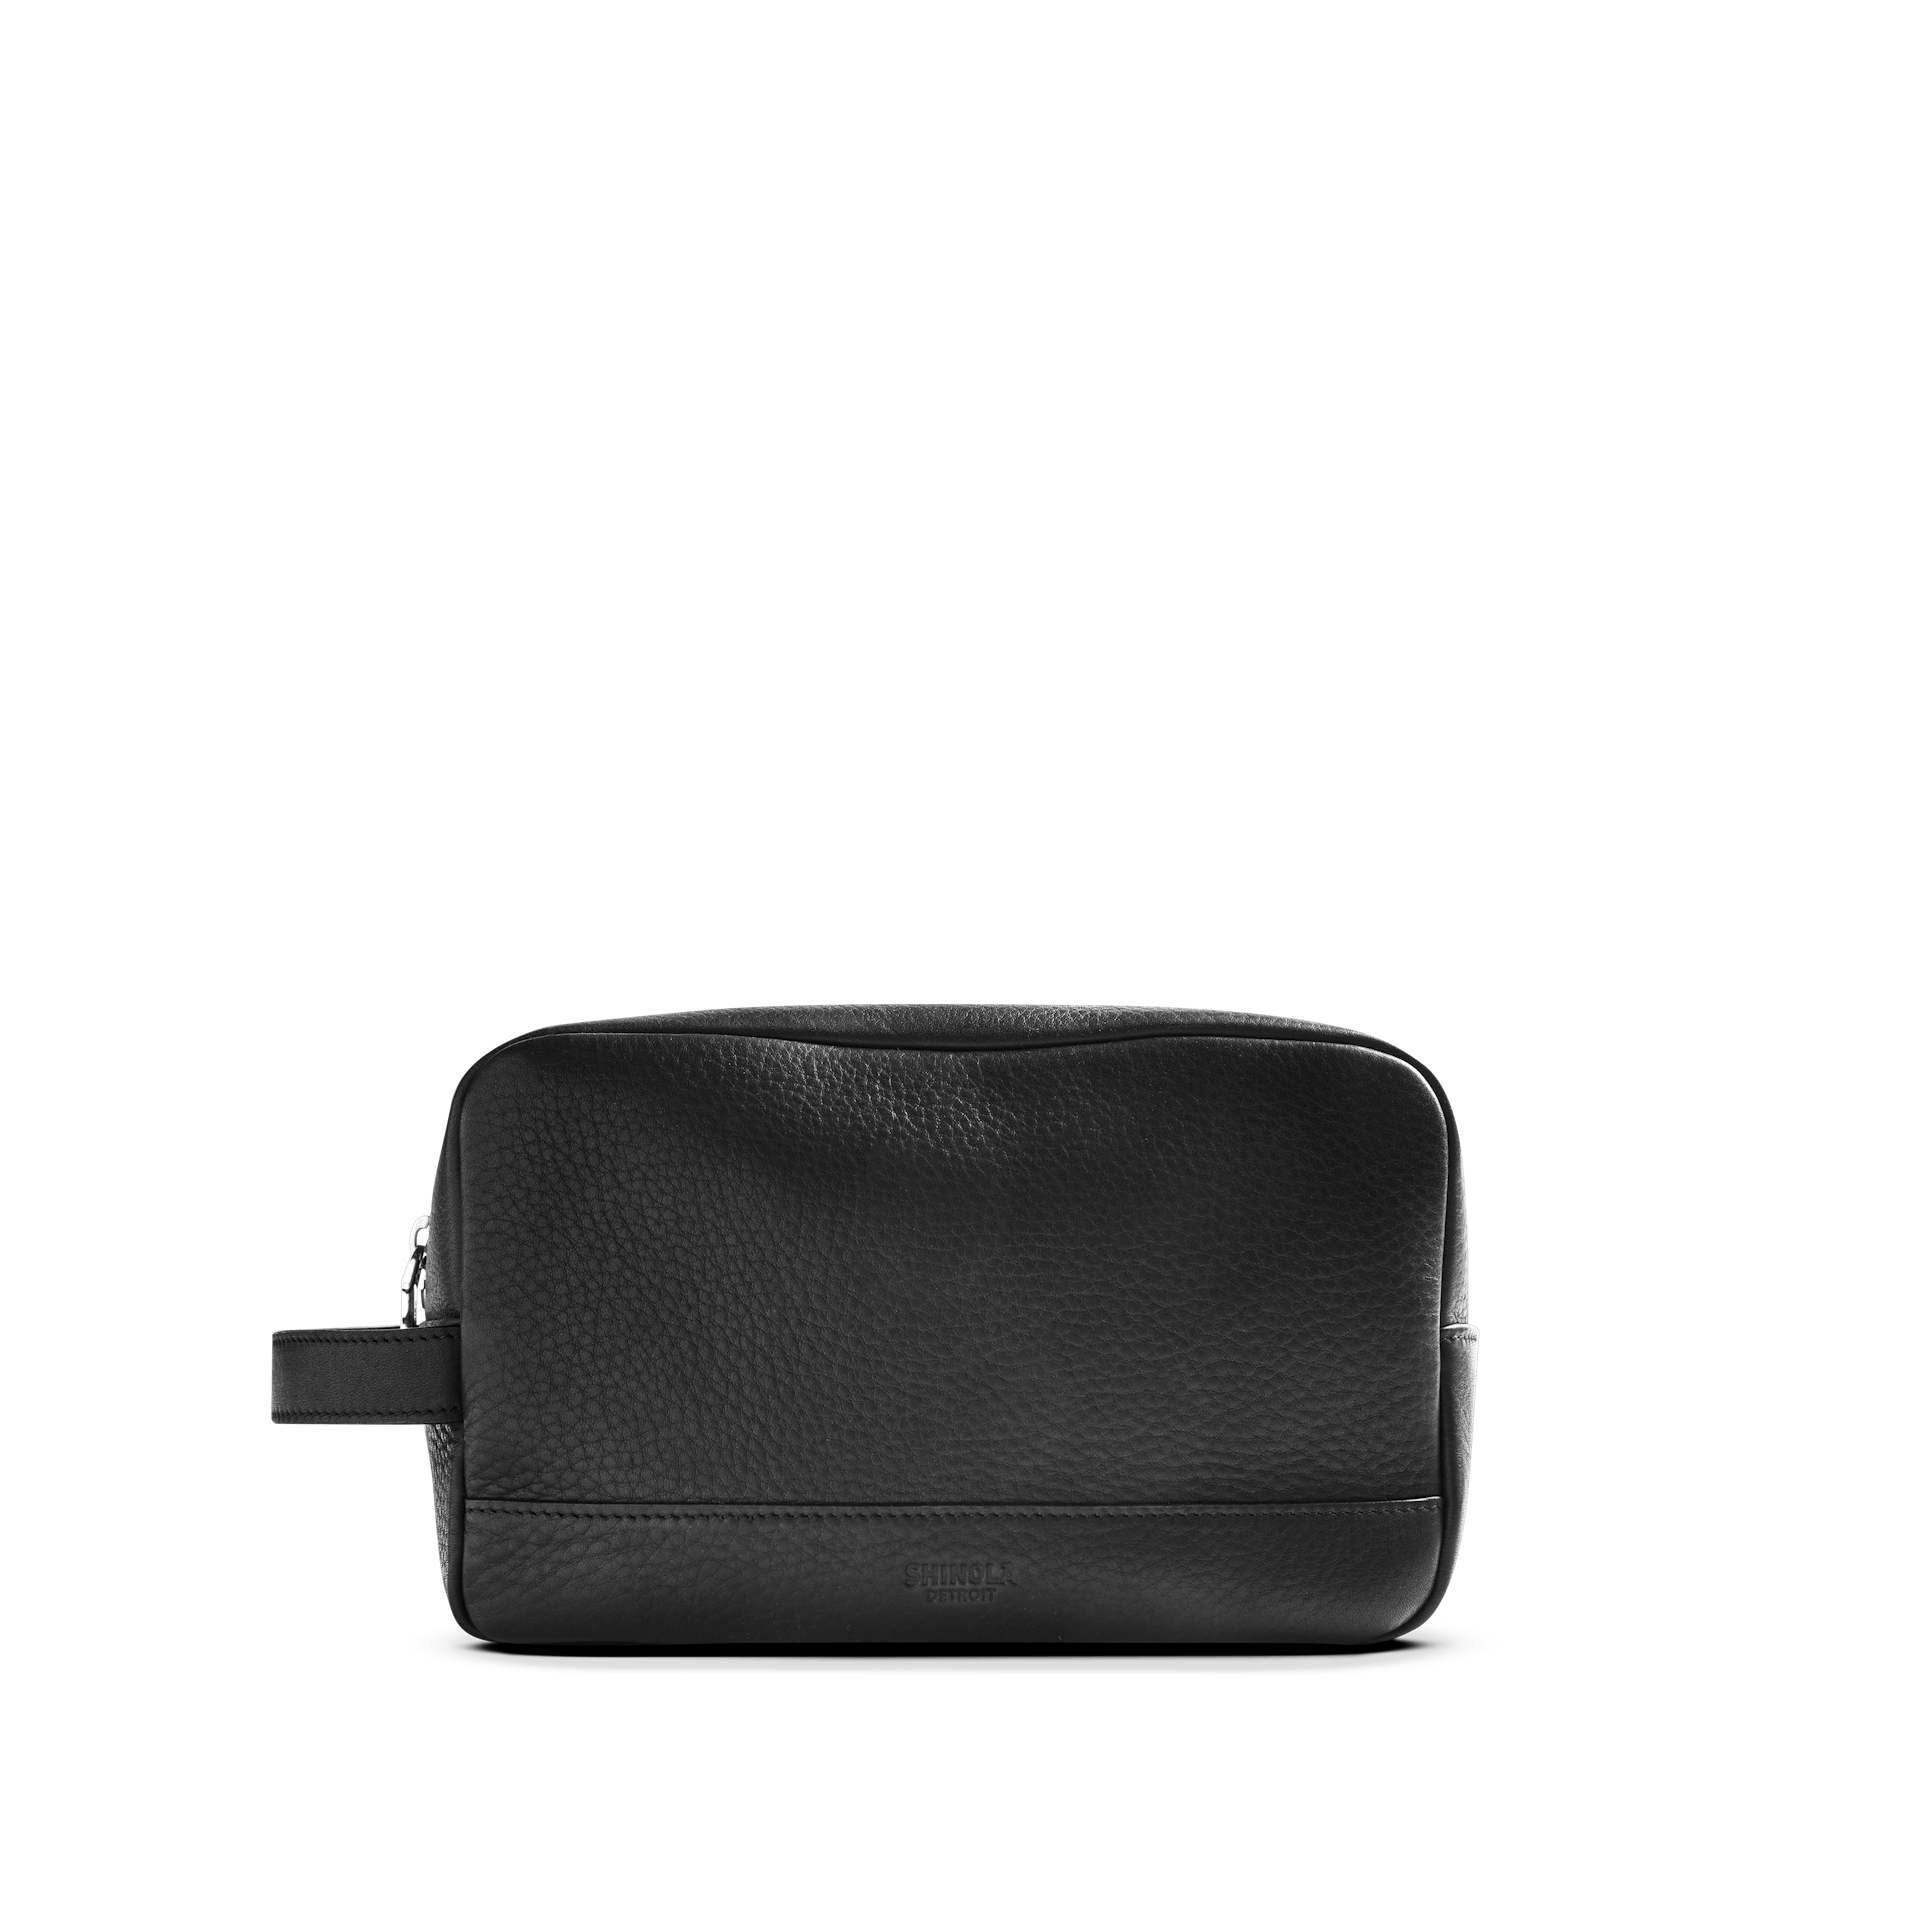 Camille Handbag Starter Kit – Calin nyc